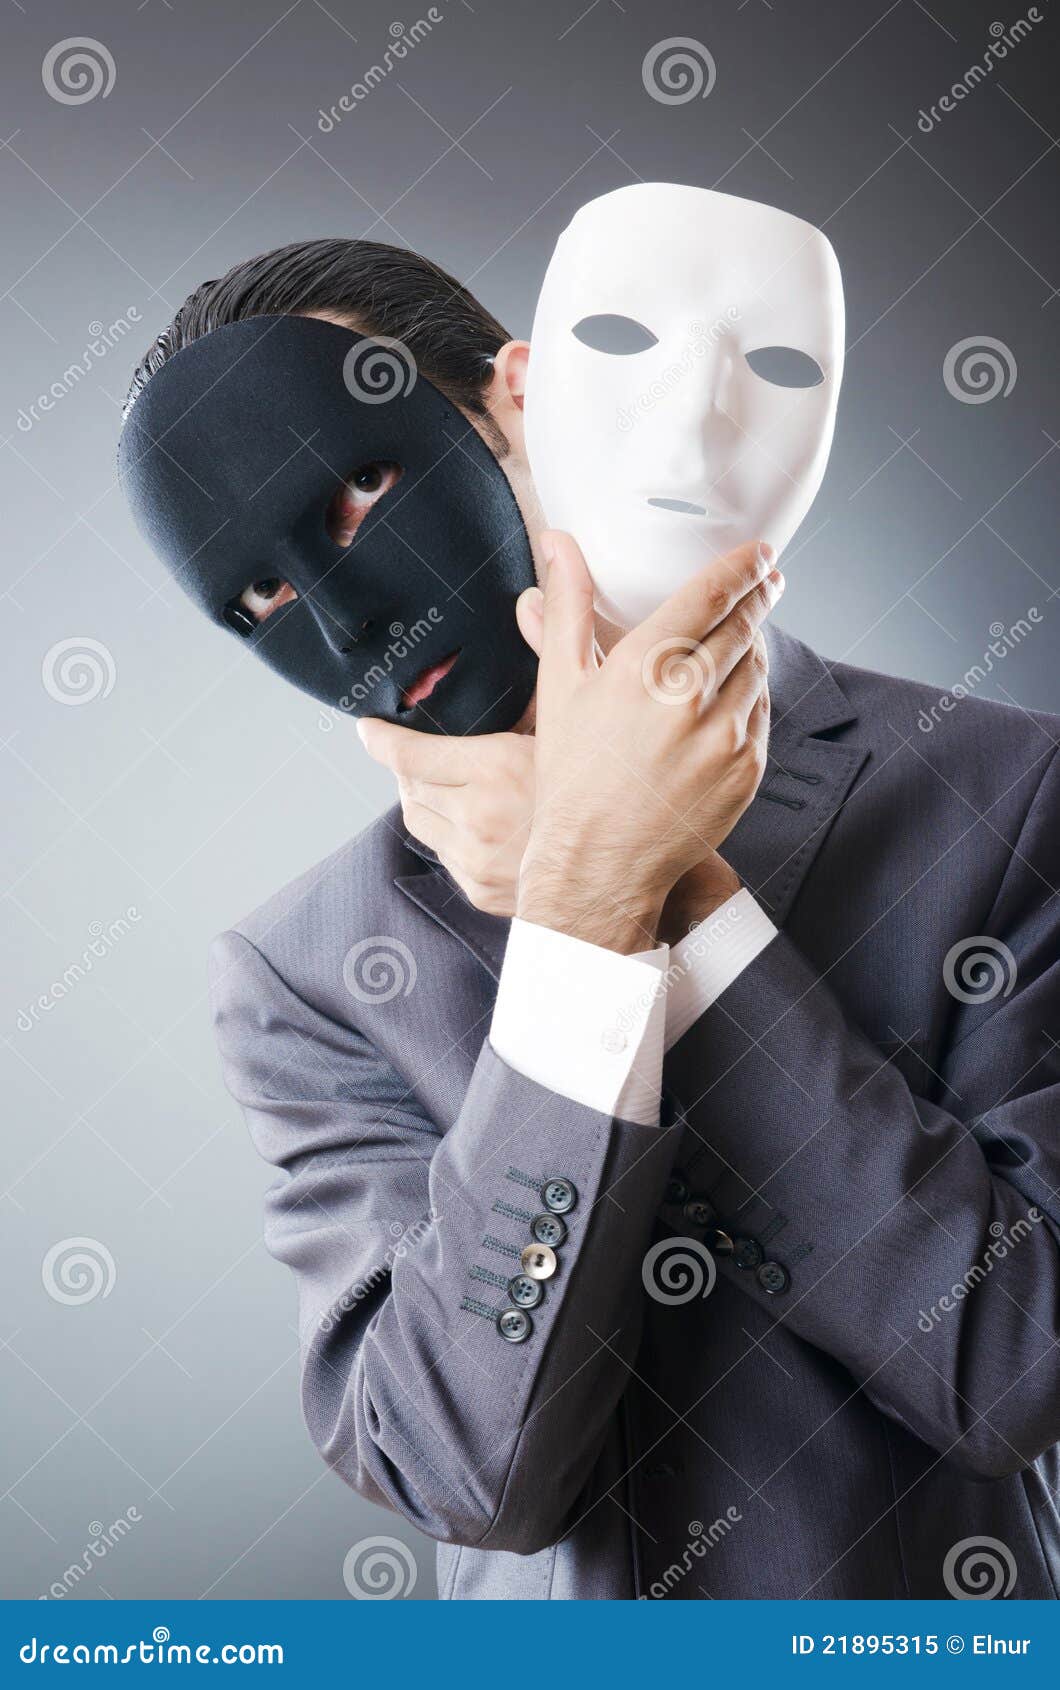 industrial espionate concept - masked businessman